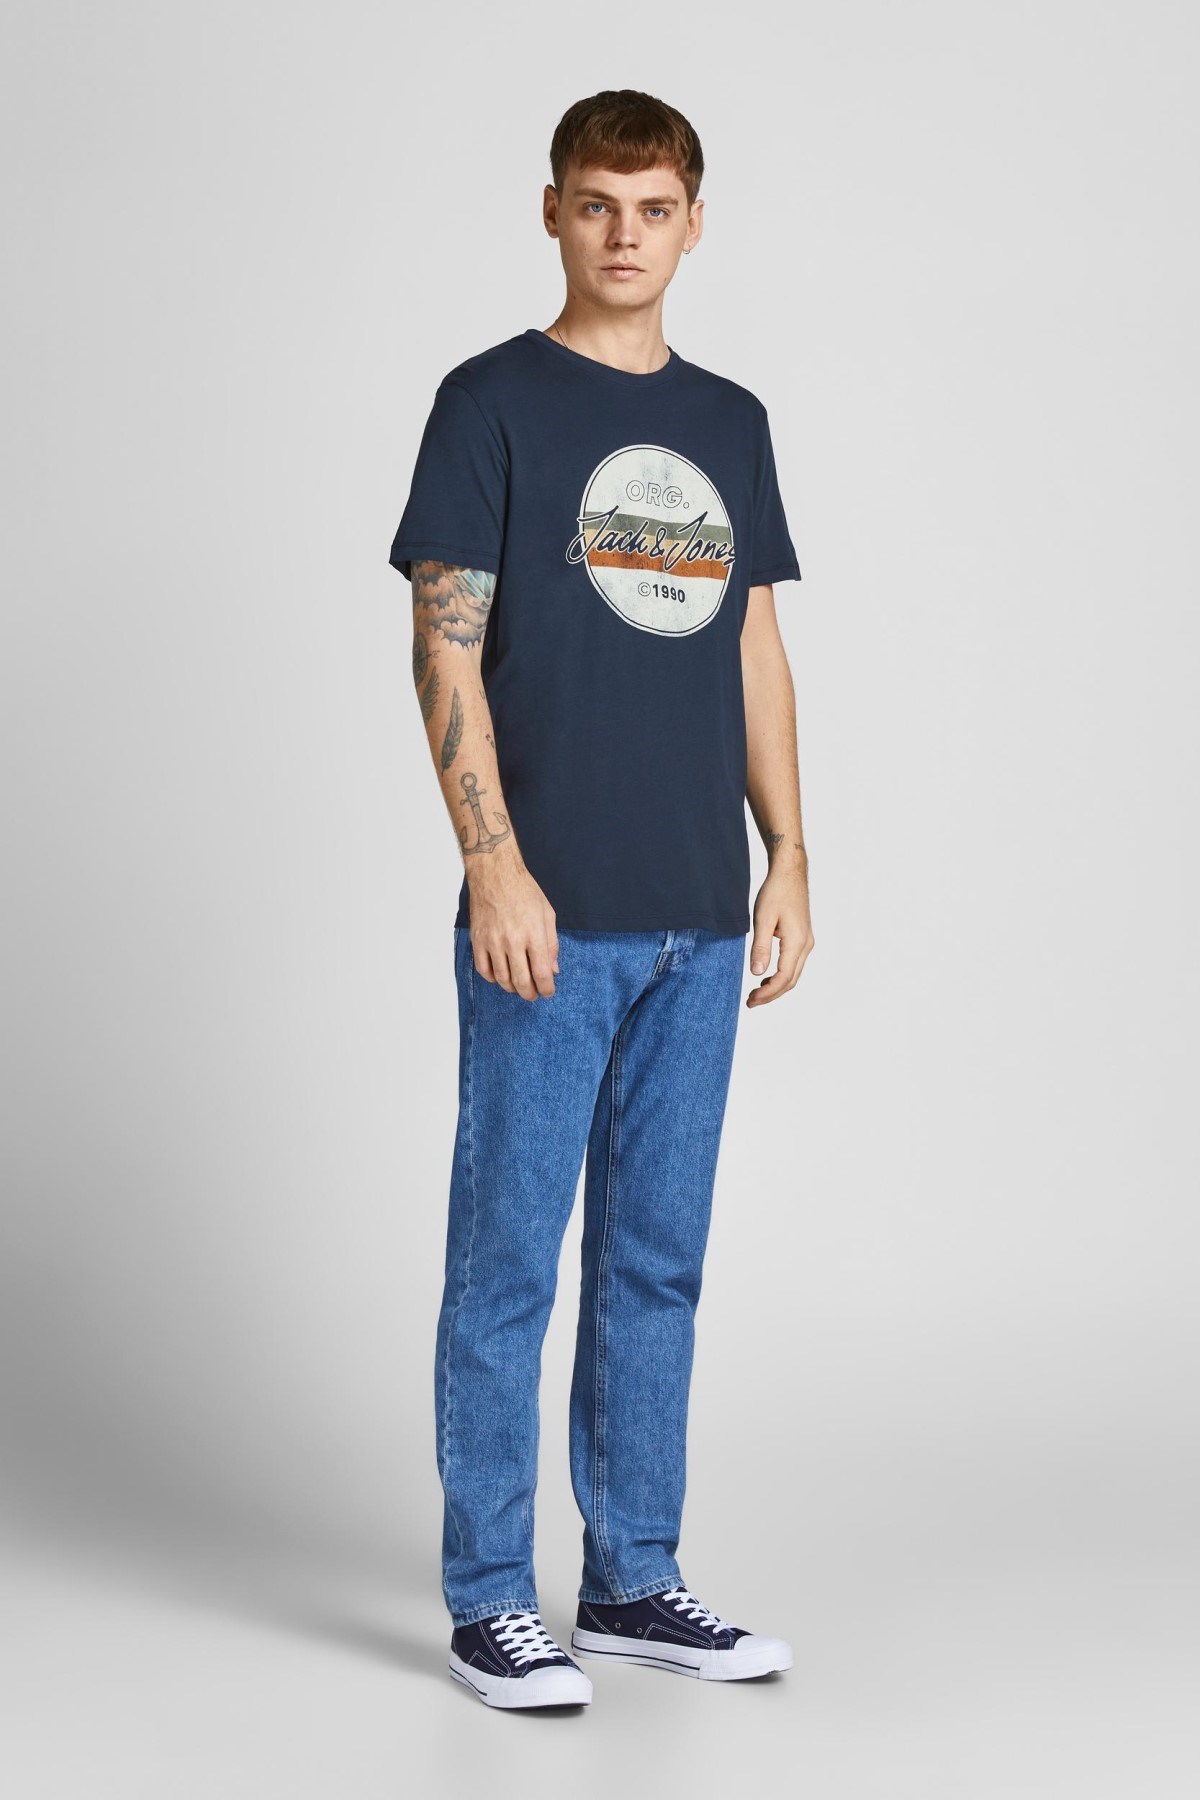 Jack Jones Erkek T-Shirt 12205503 Navy Blazer